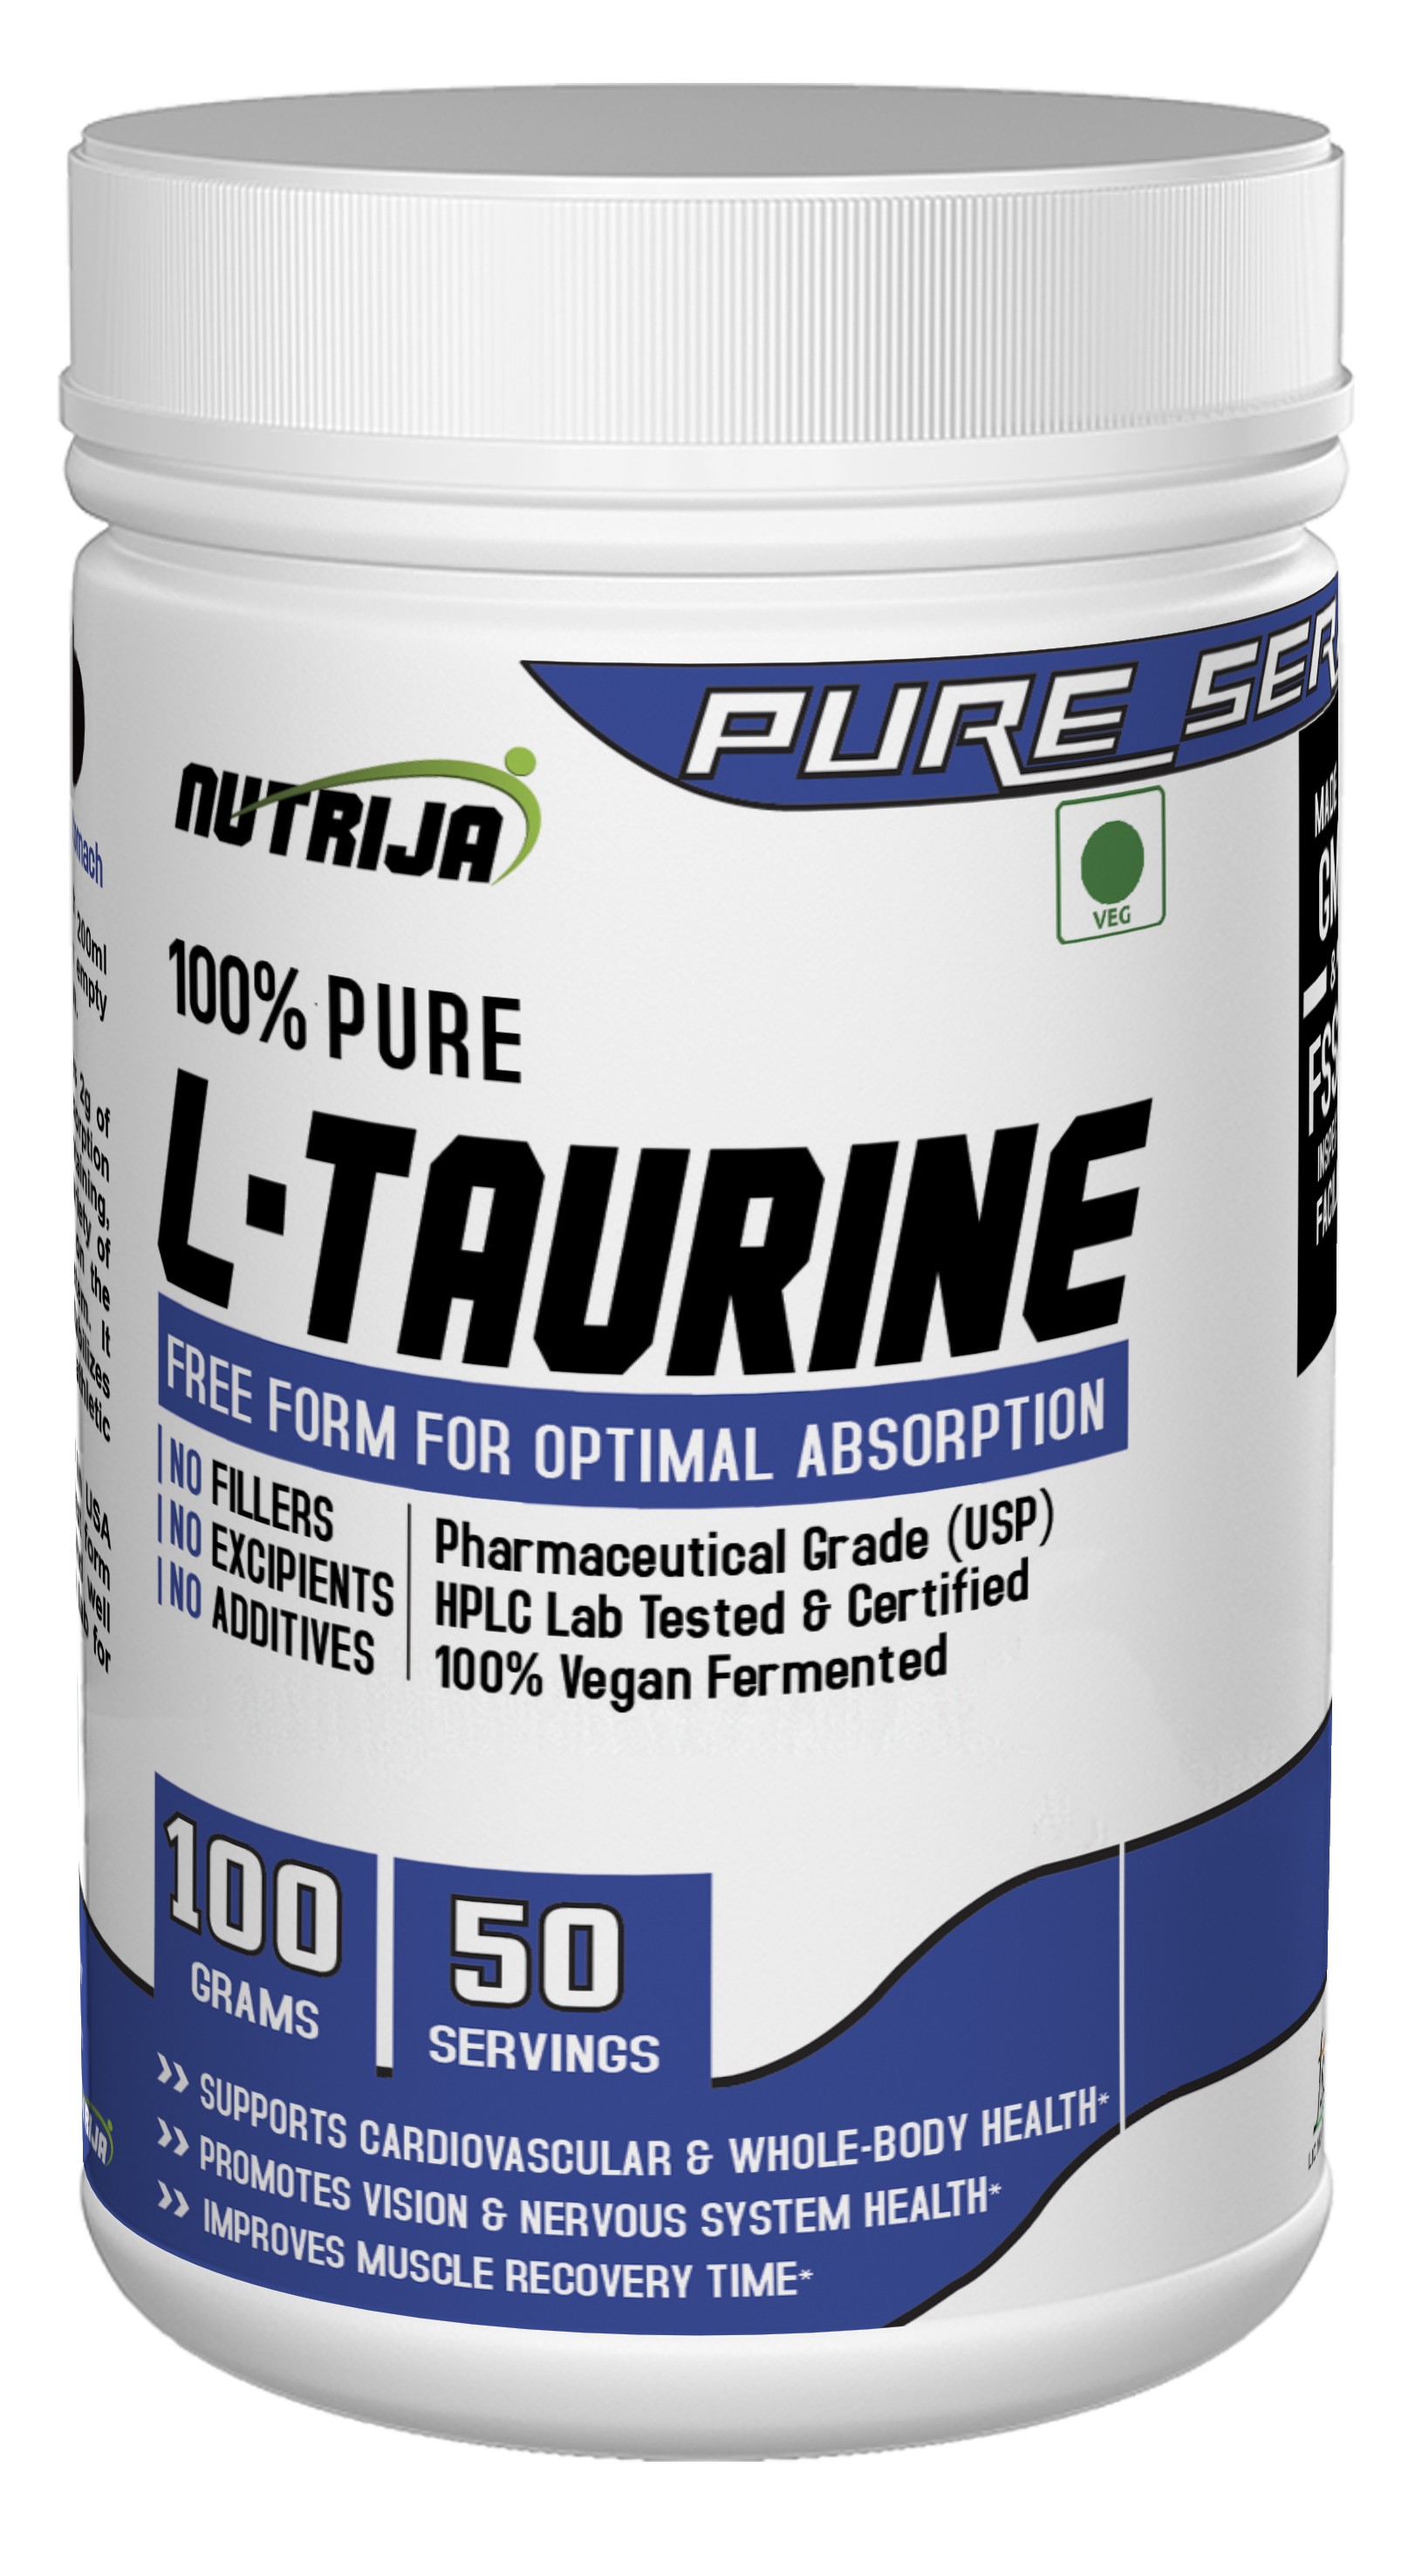 taurine vitamin water